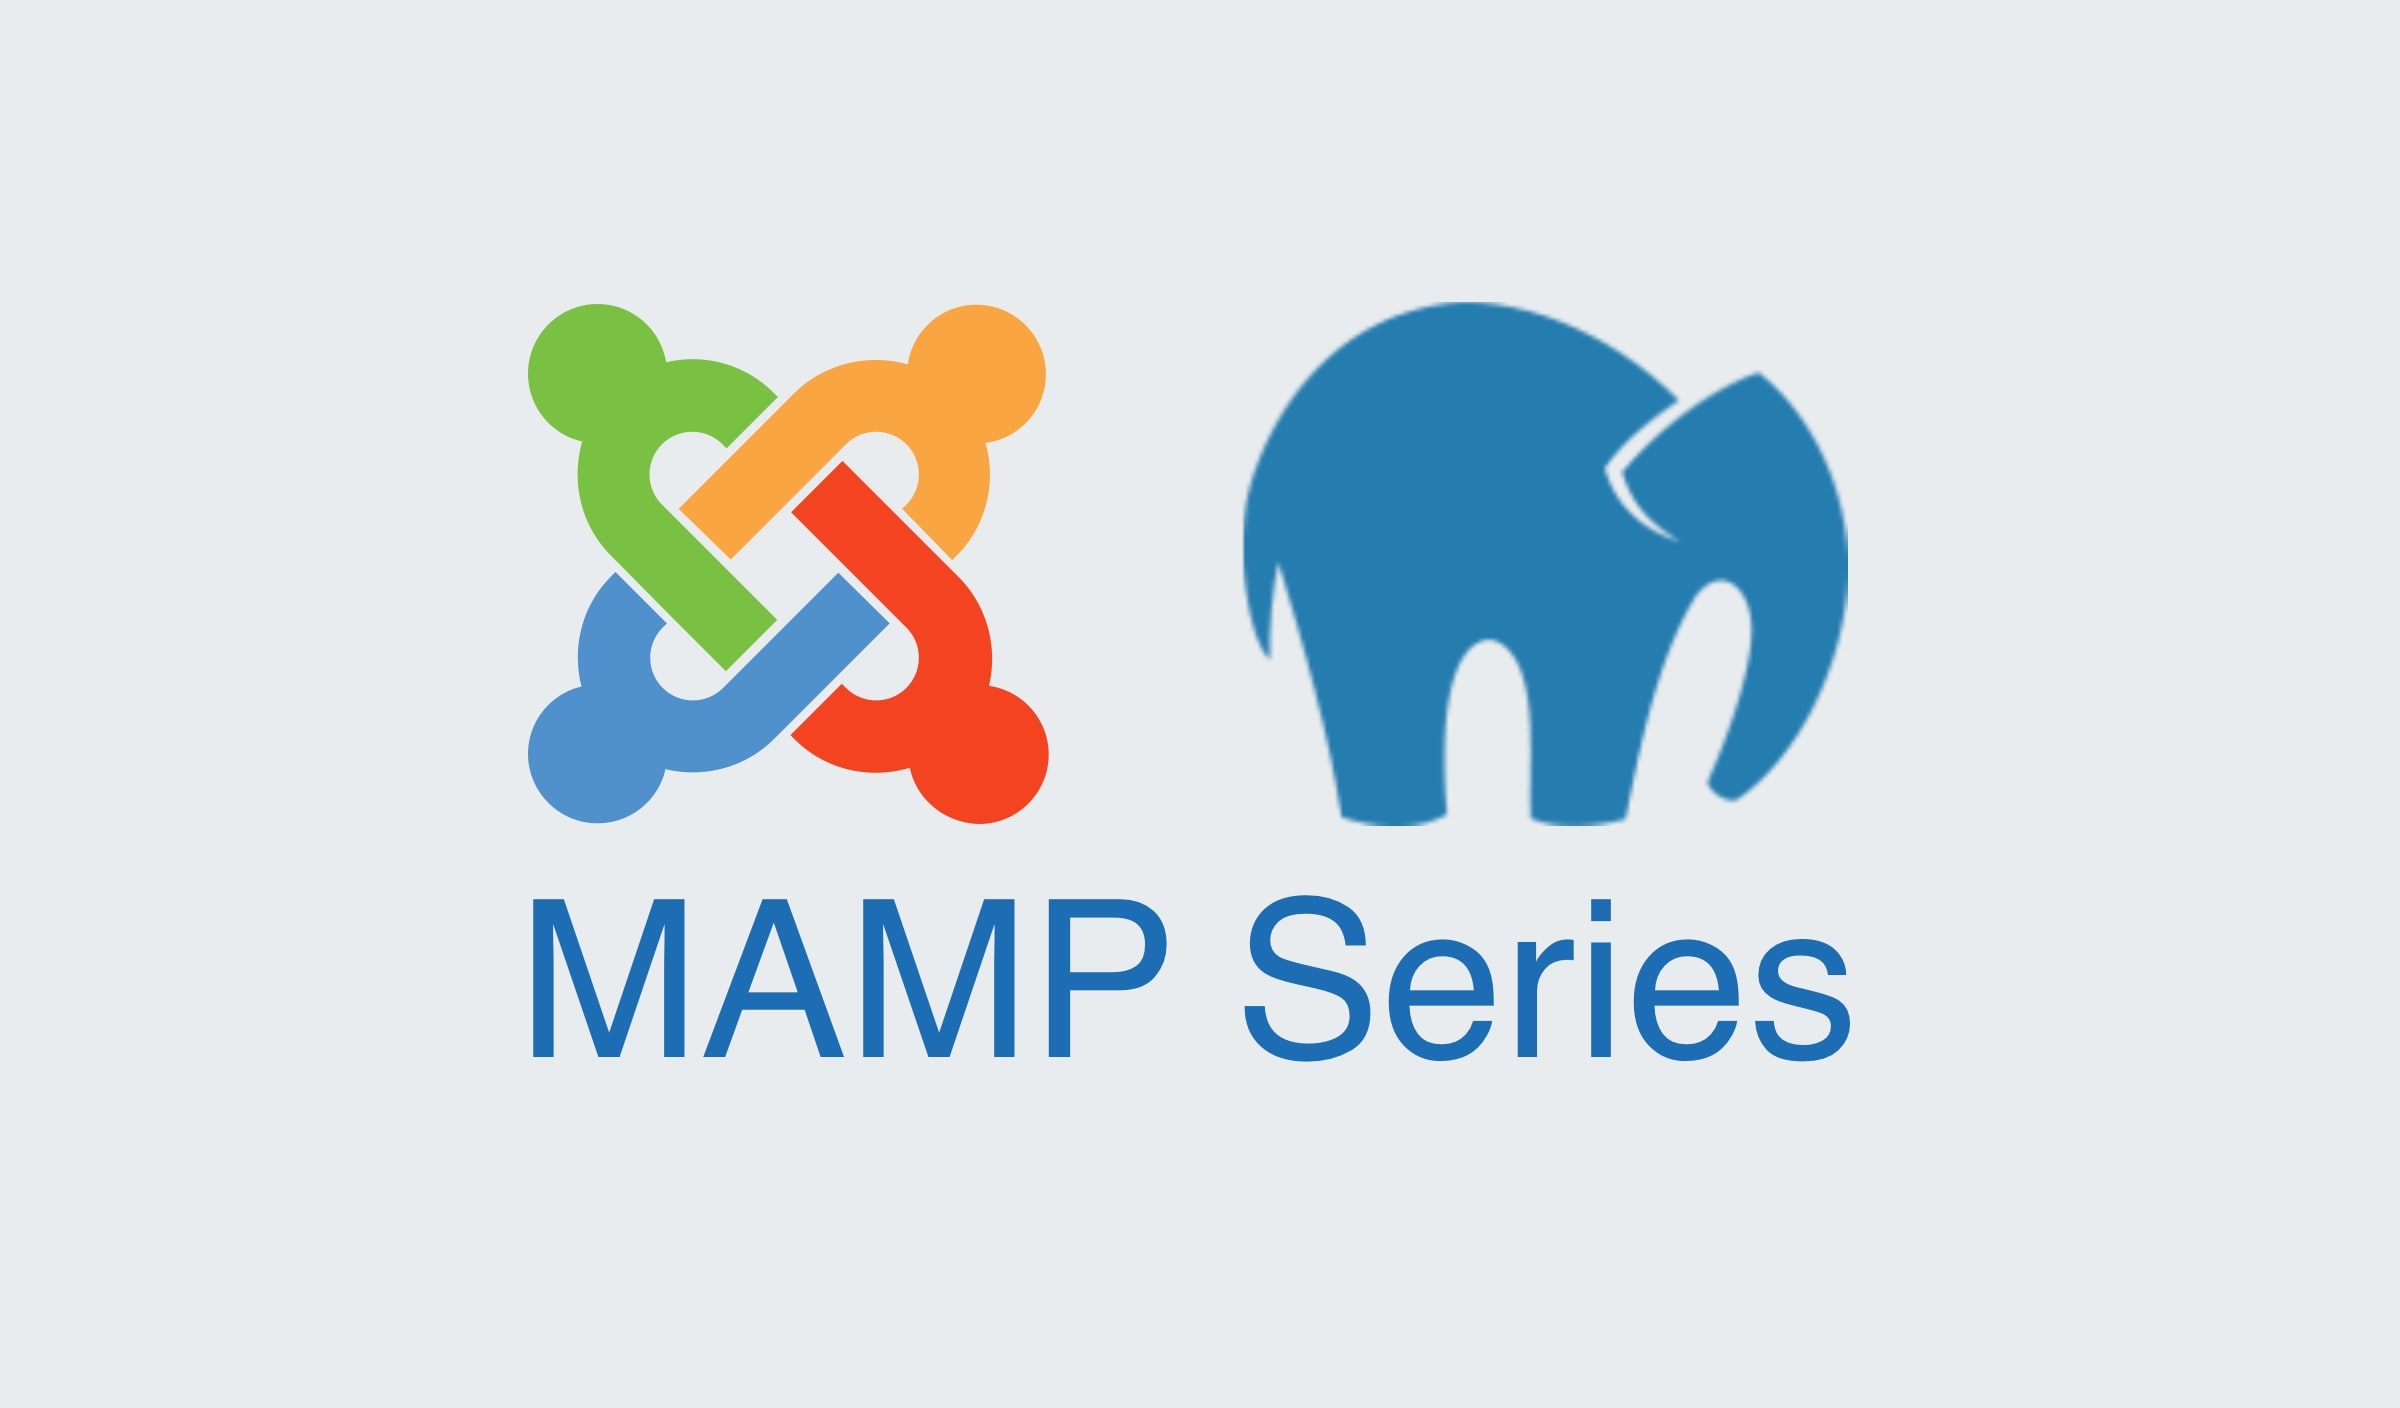 Joomla and MAMP series